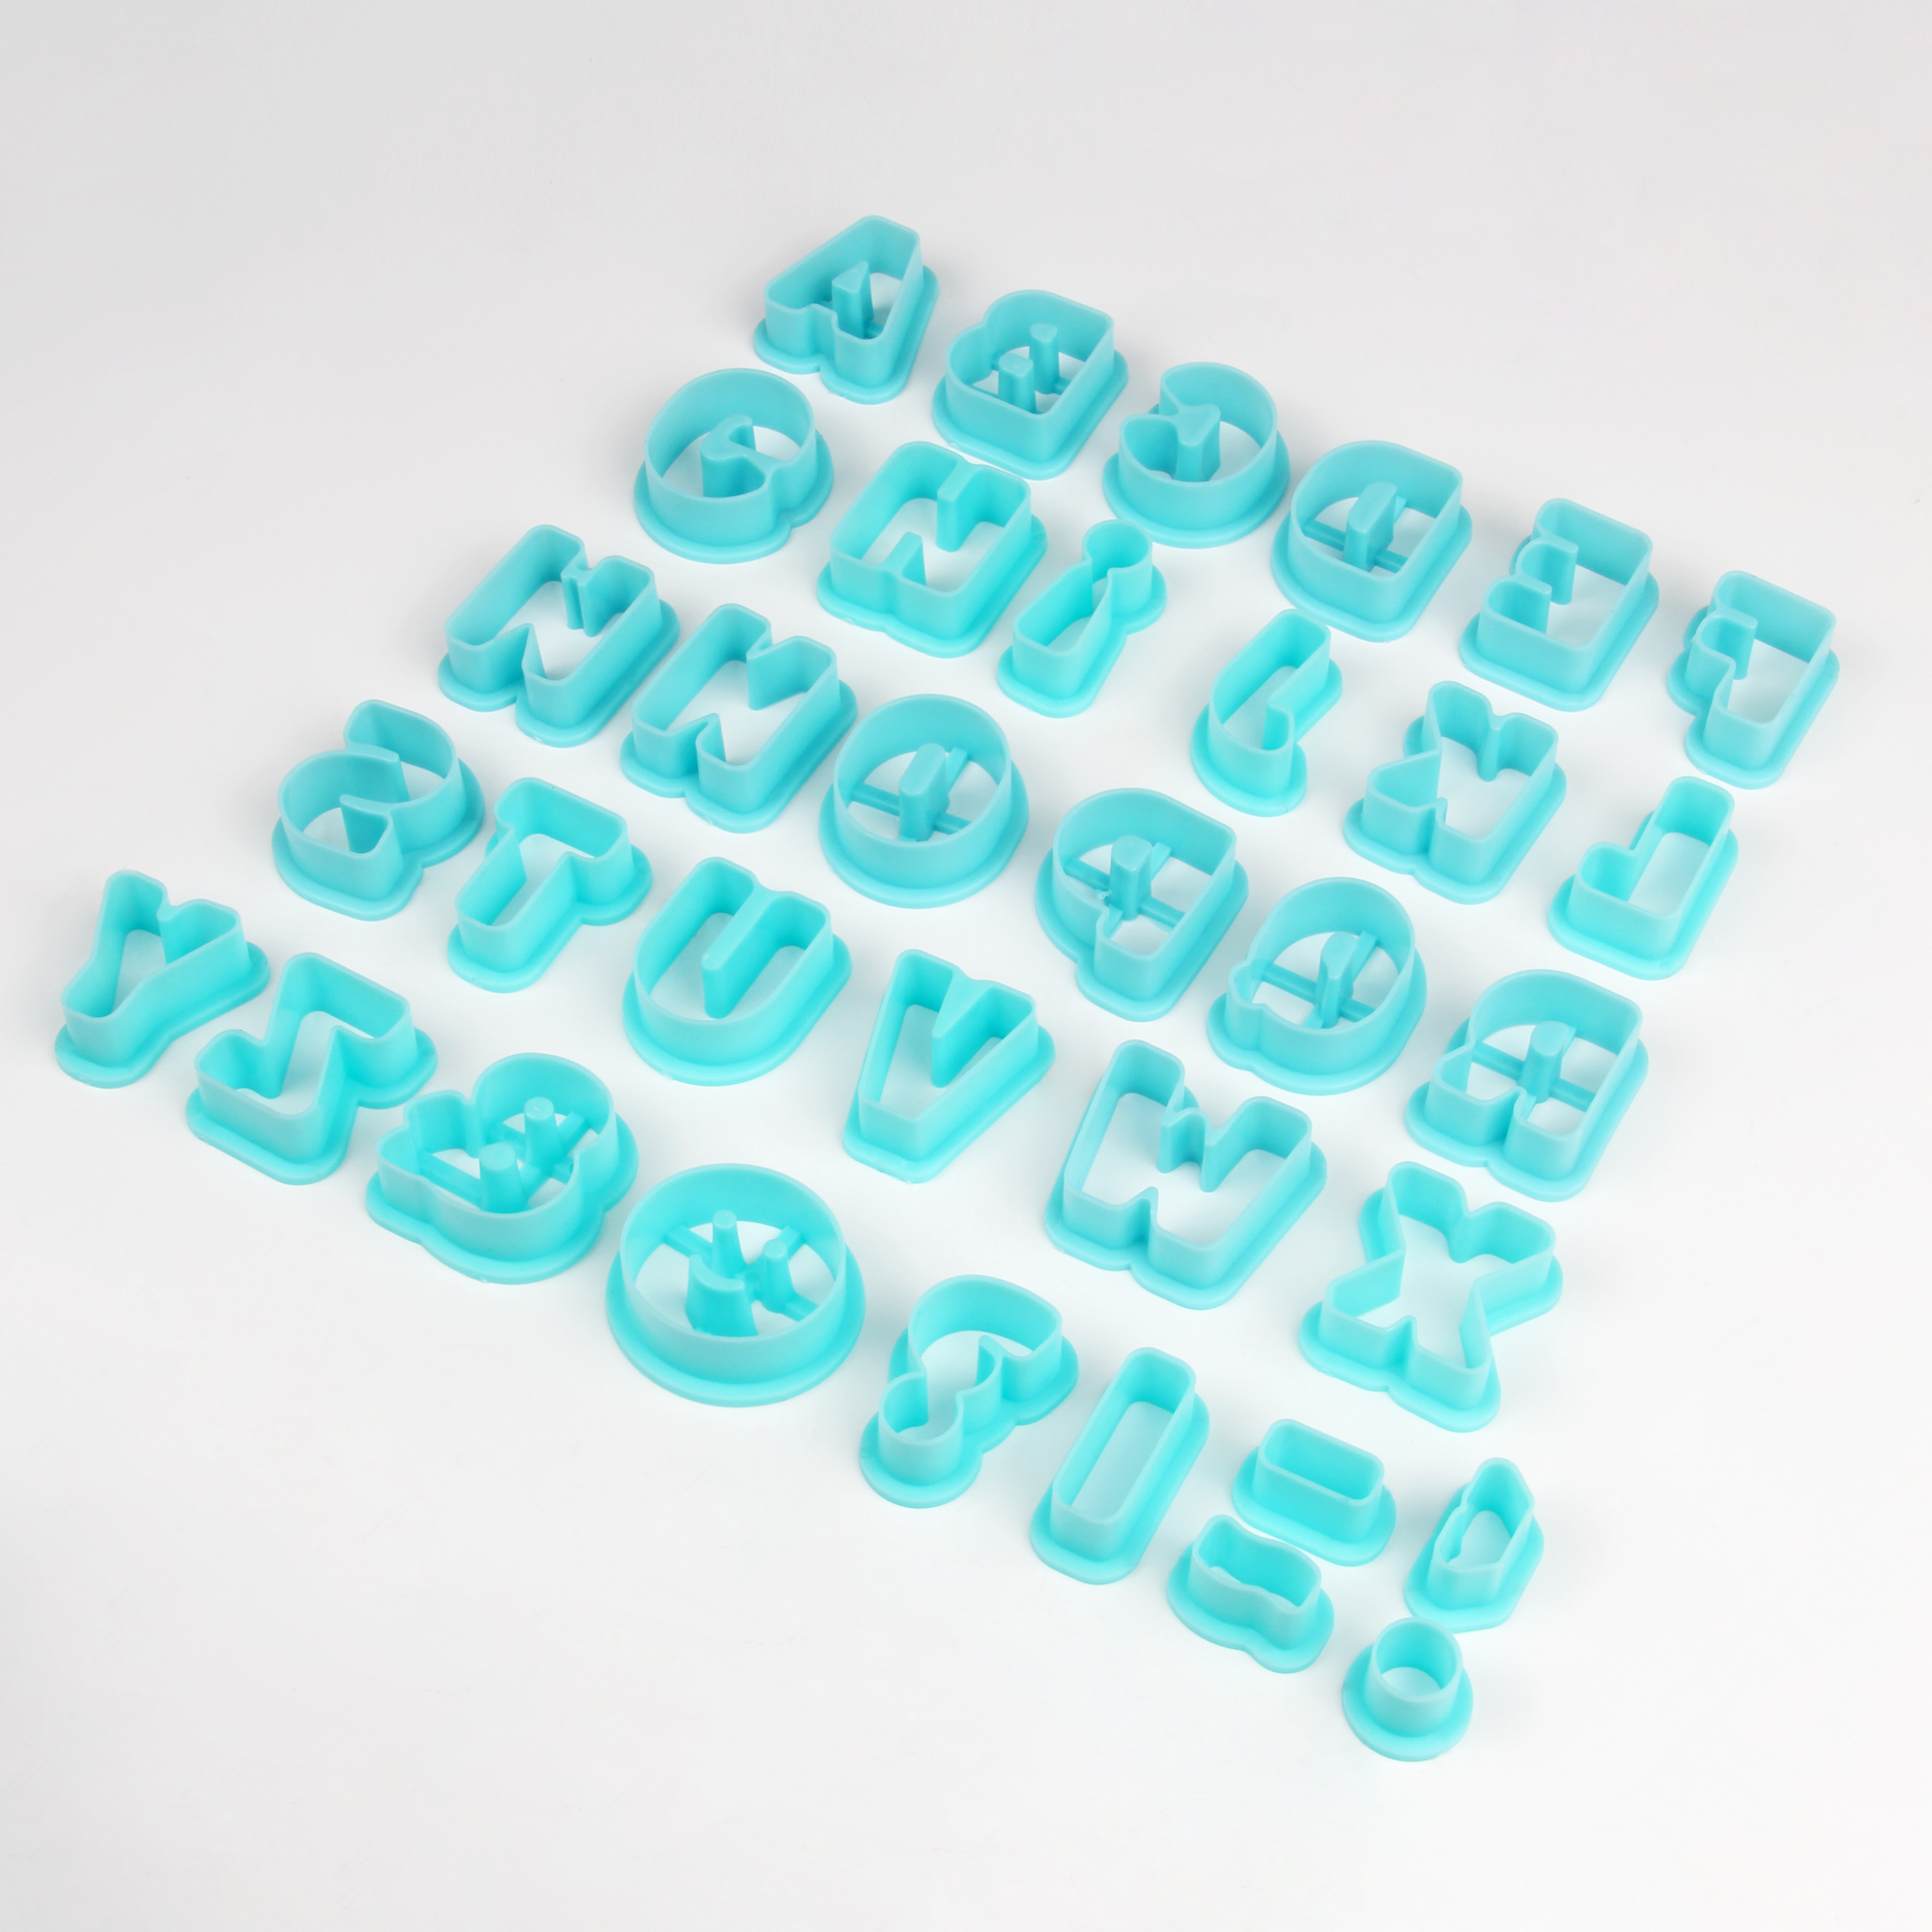 HB0215M Plastic New Design Alphabet Letters Cookie Stamps set